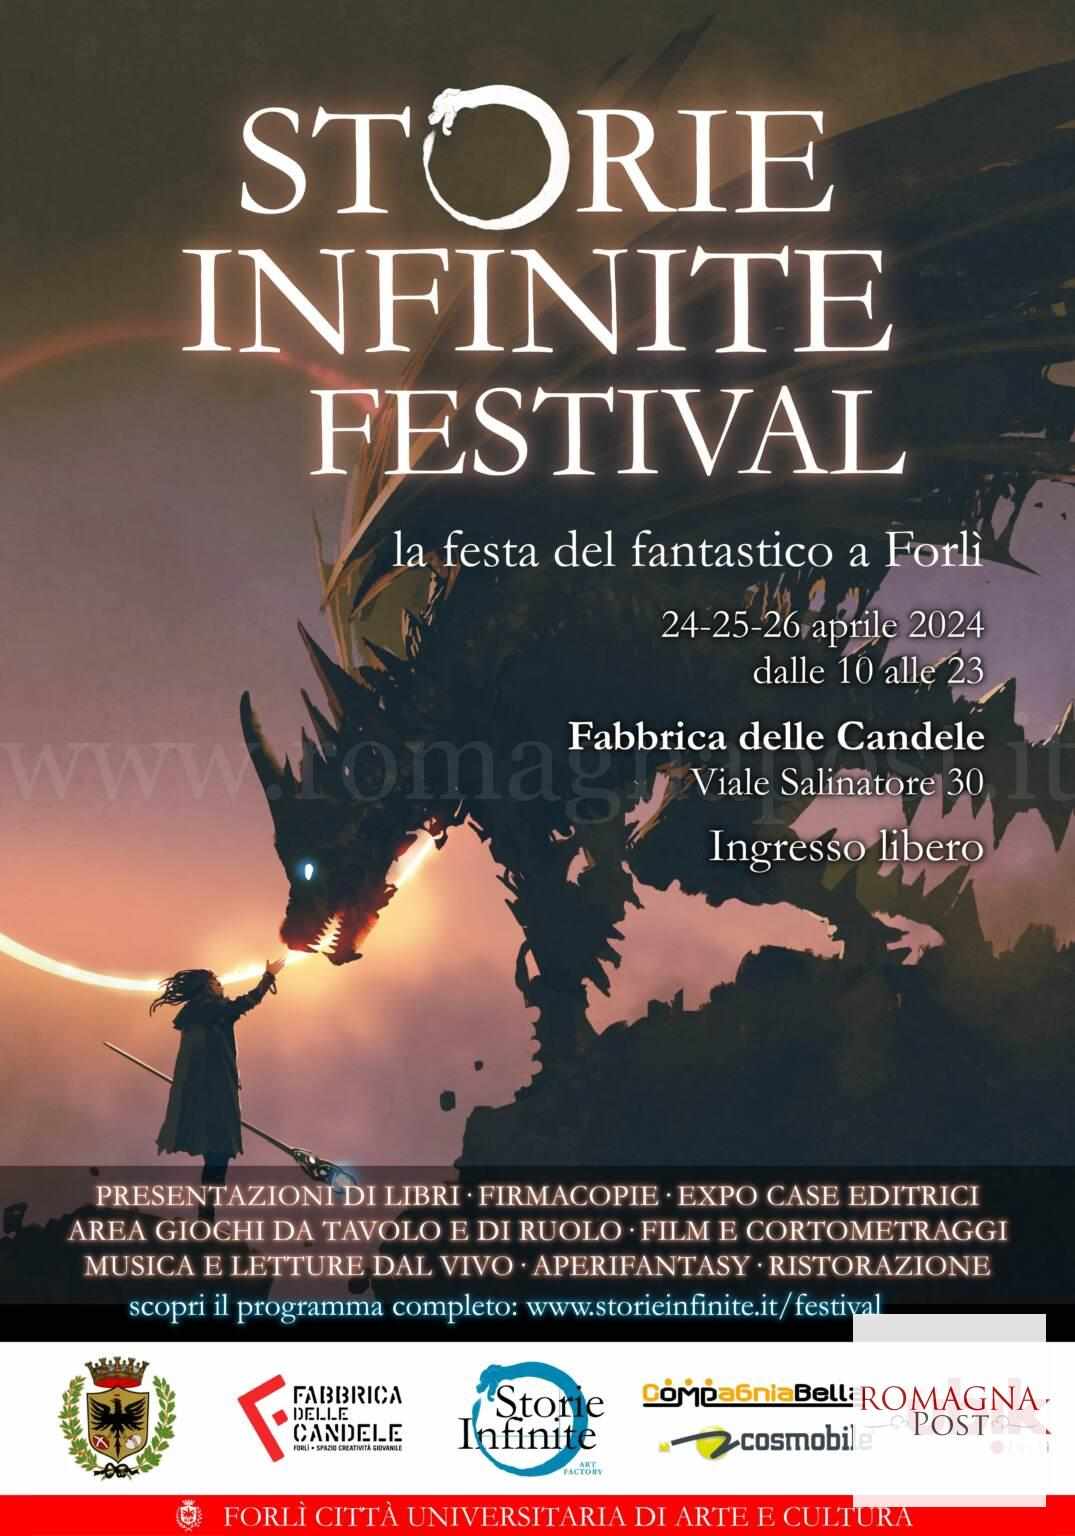 Storie Infinite Festival: Il Fantastico lands in Forlì